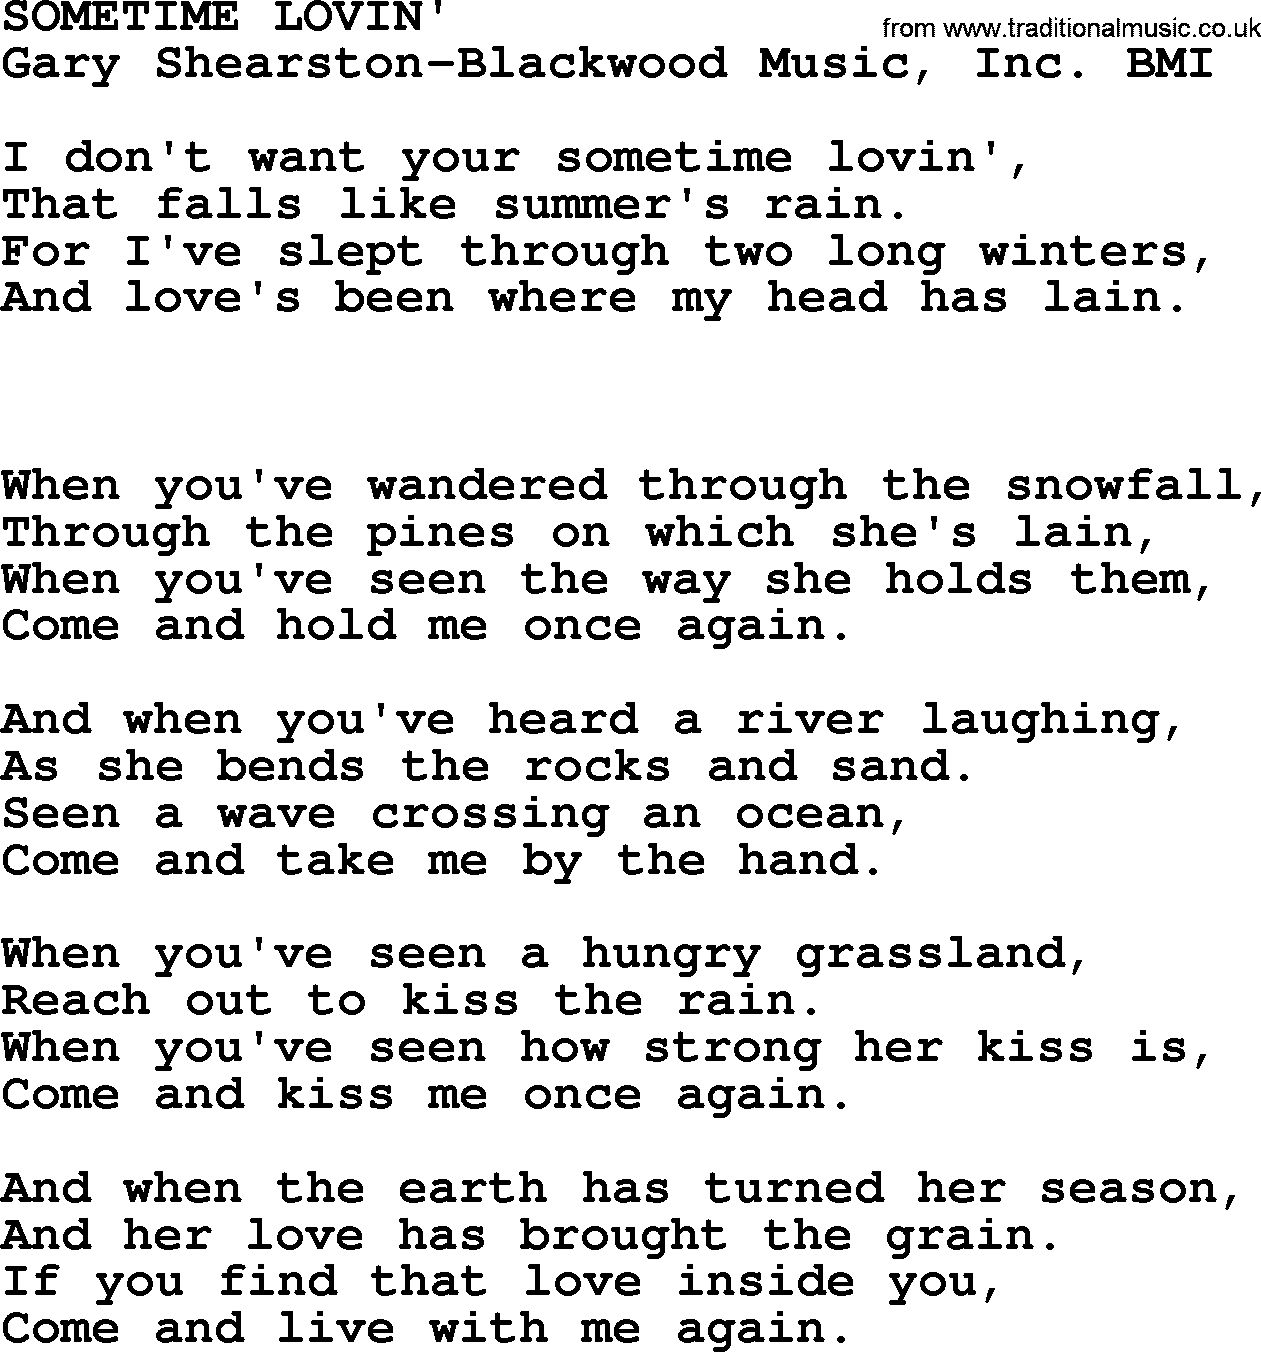 Peter, Paul and Mary song Sometime Lovin lyrics